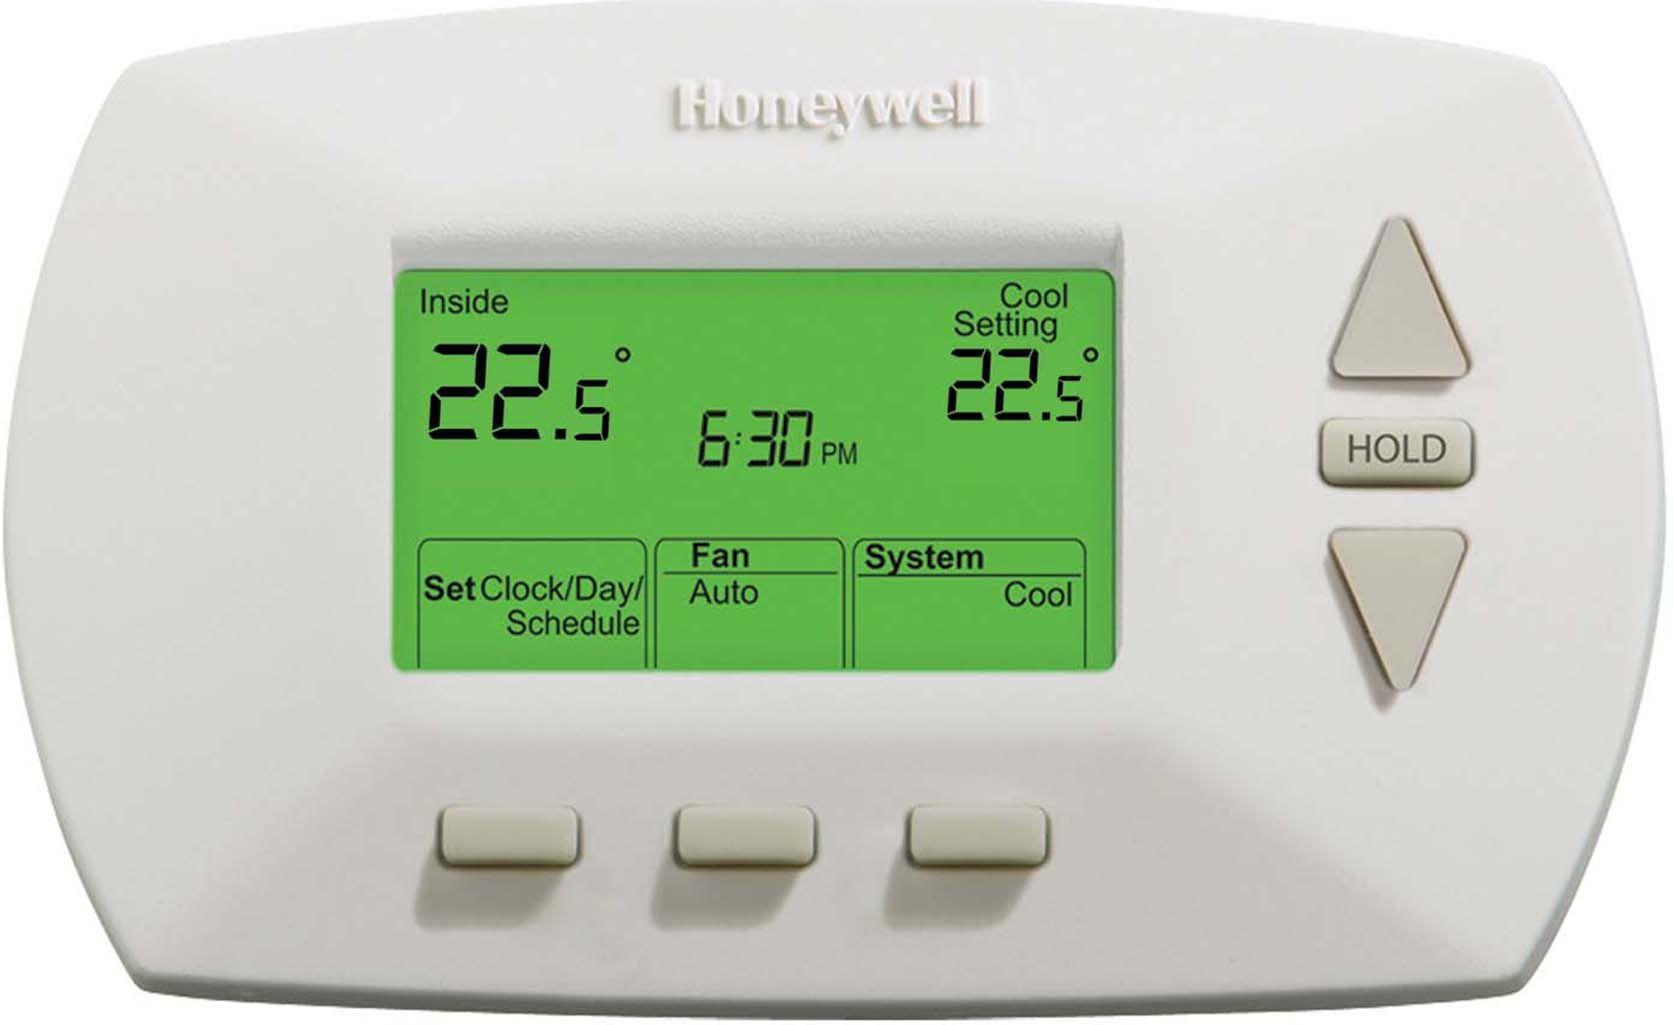 Honeywell Thermostat Manual Rth 230B